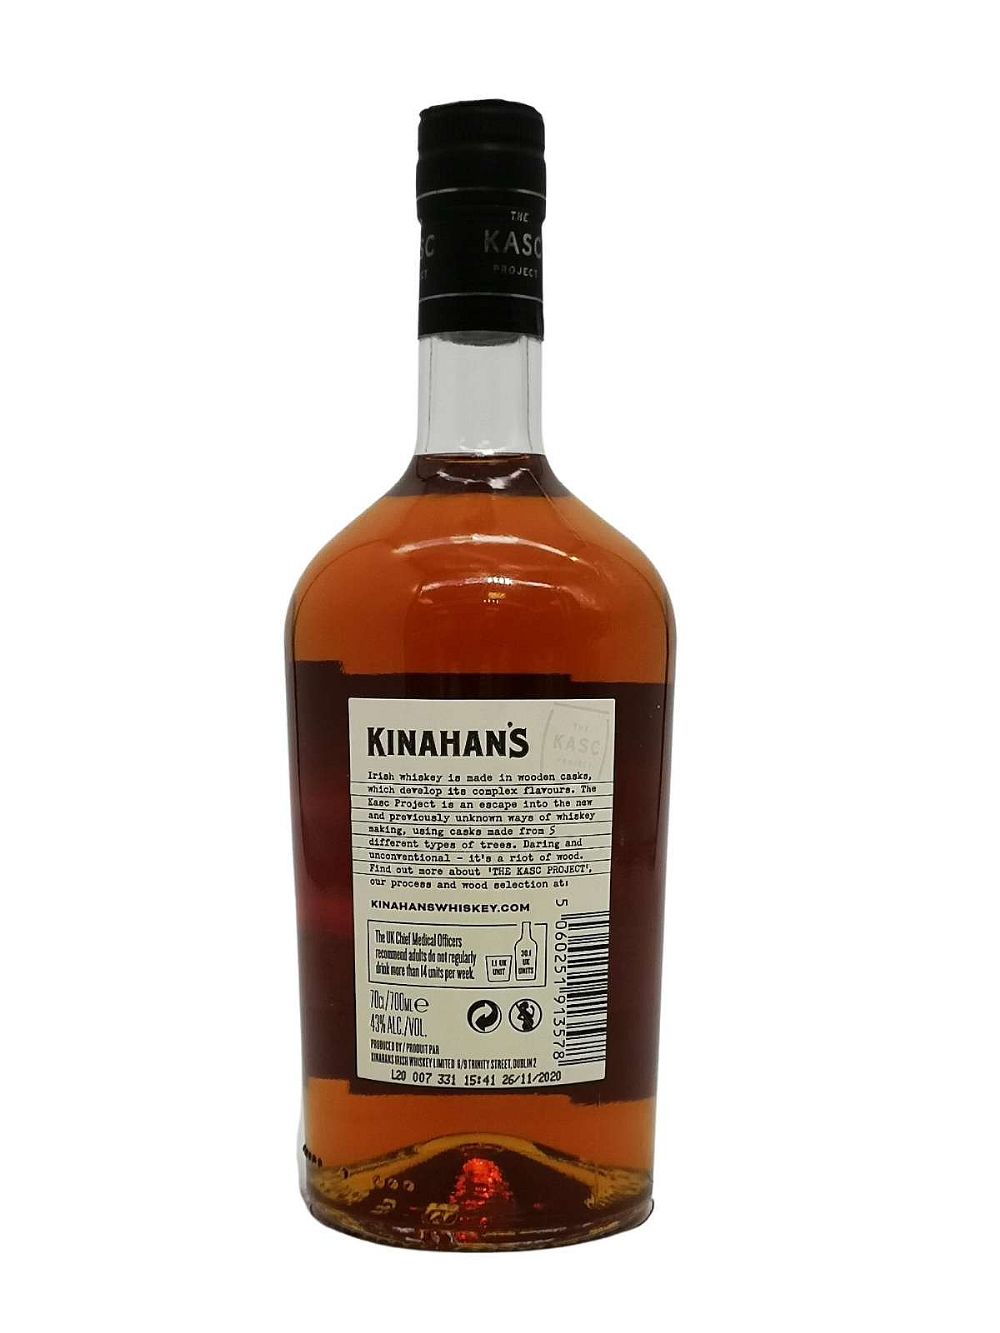 | The Irish Whiskey Kasc Auction Irish Whiskey, Online | Kinahan\'s Bidders Platform Project Whiskey